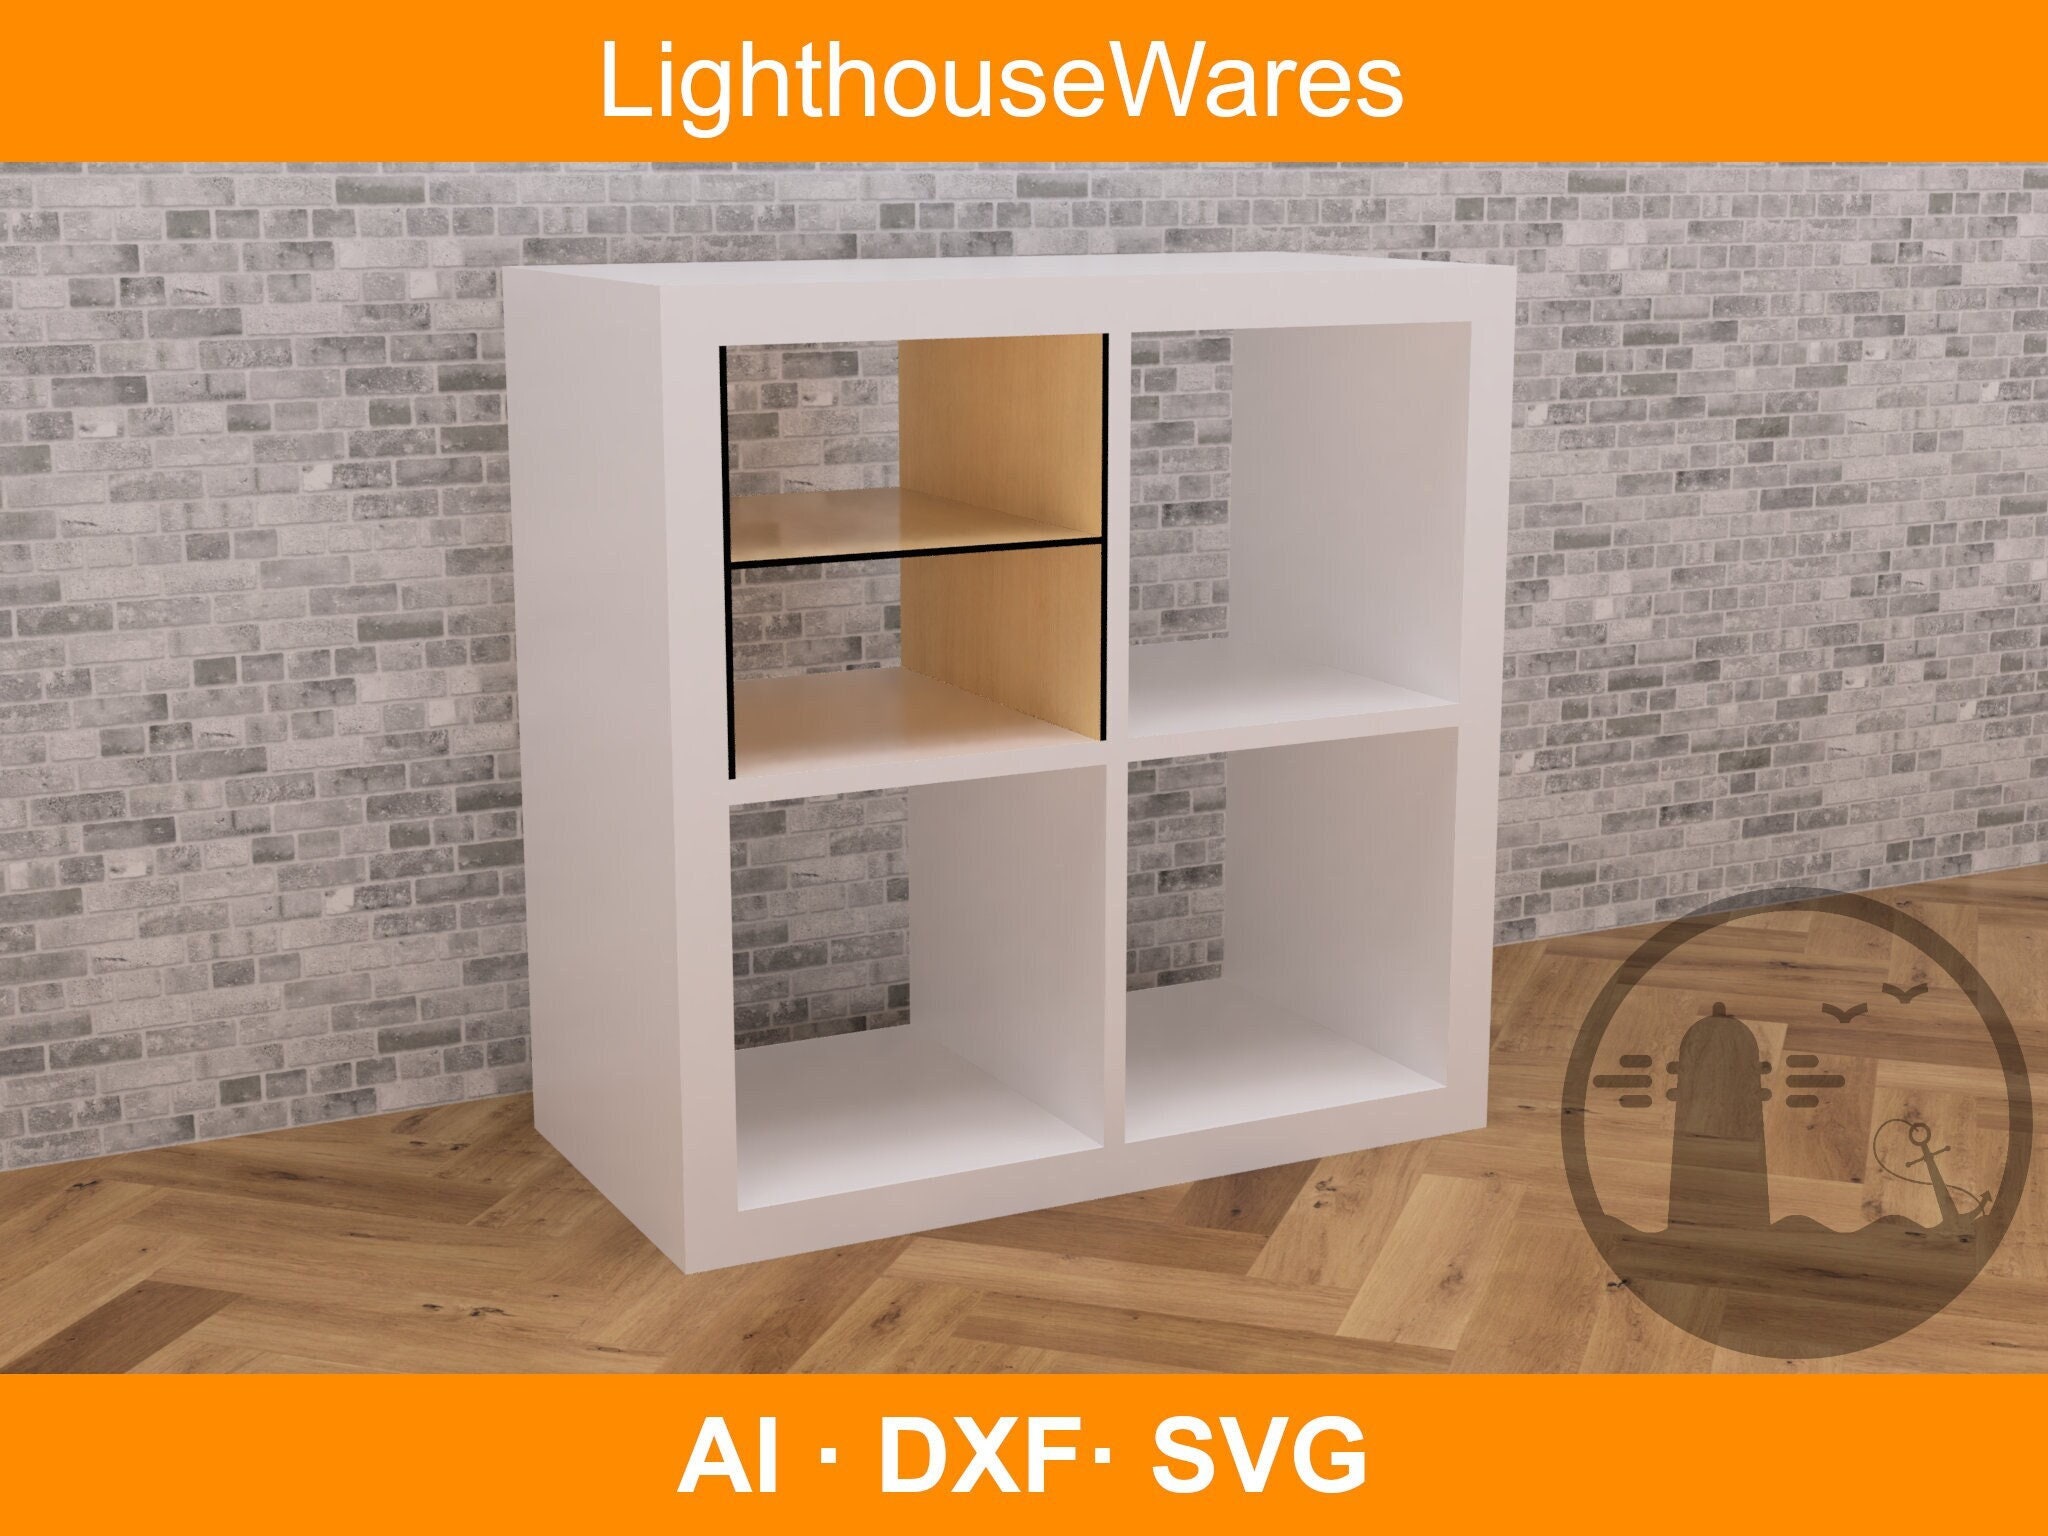 x110, Support Plexiglas® pour MINIFIGS type LEGO® compatible meuble KALLAX